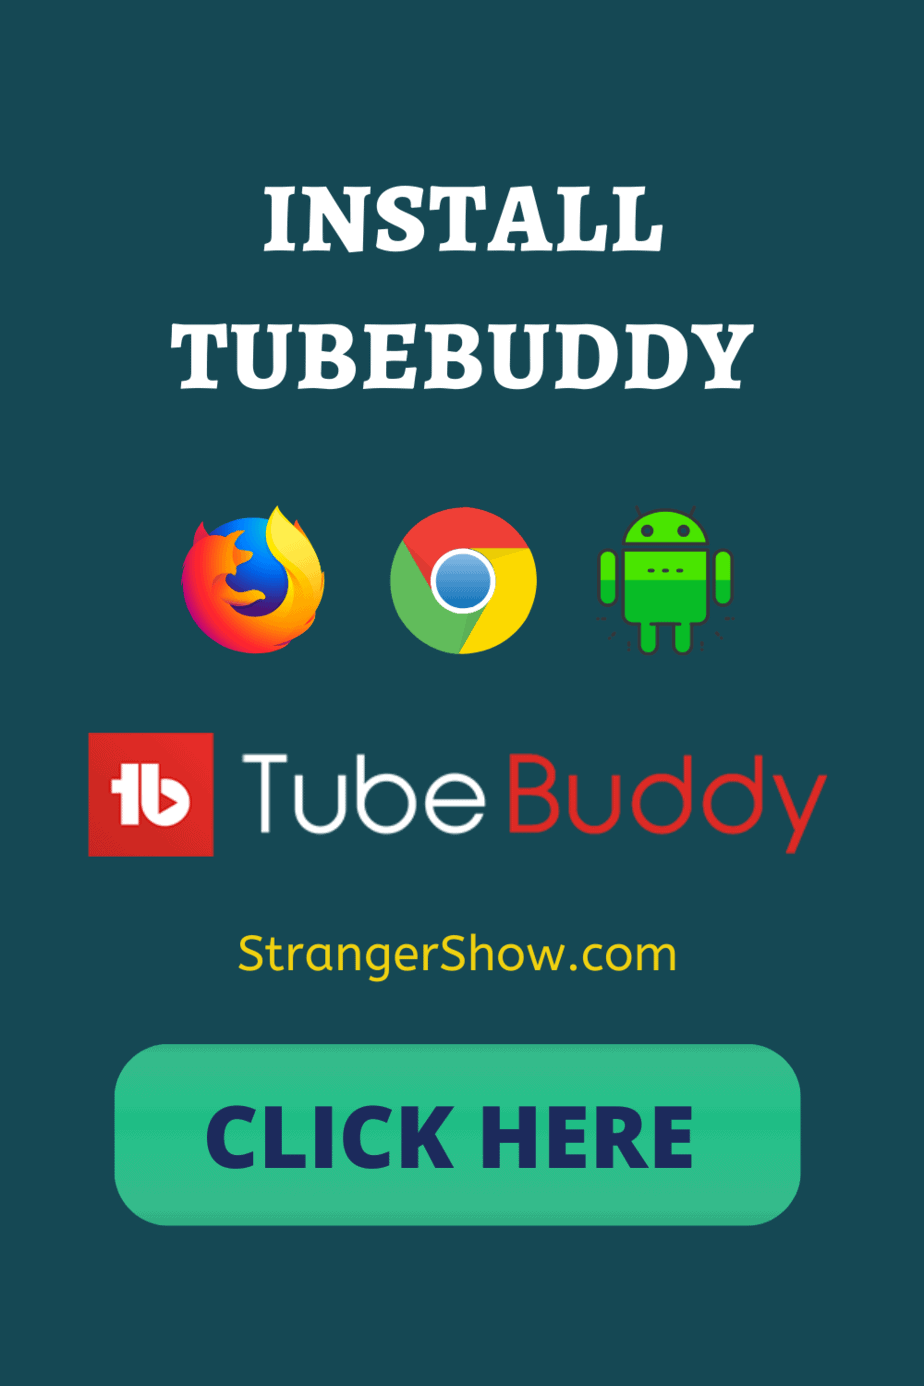 TubeBuddy Installation for Pinterest Image